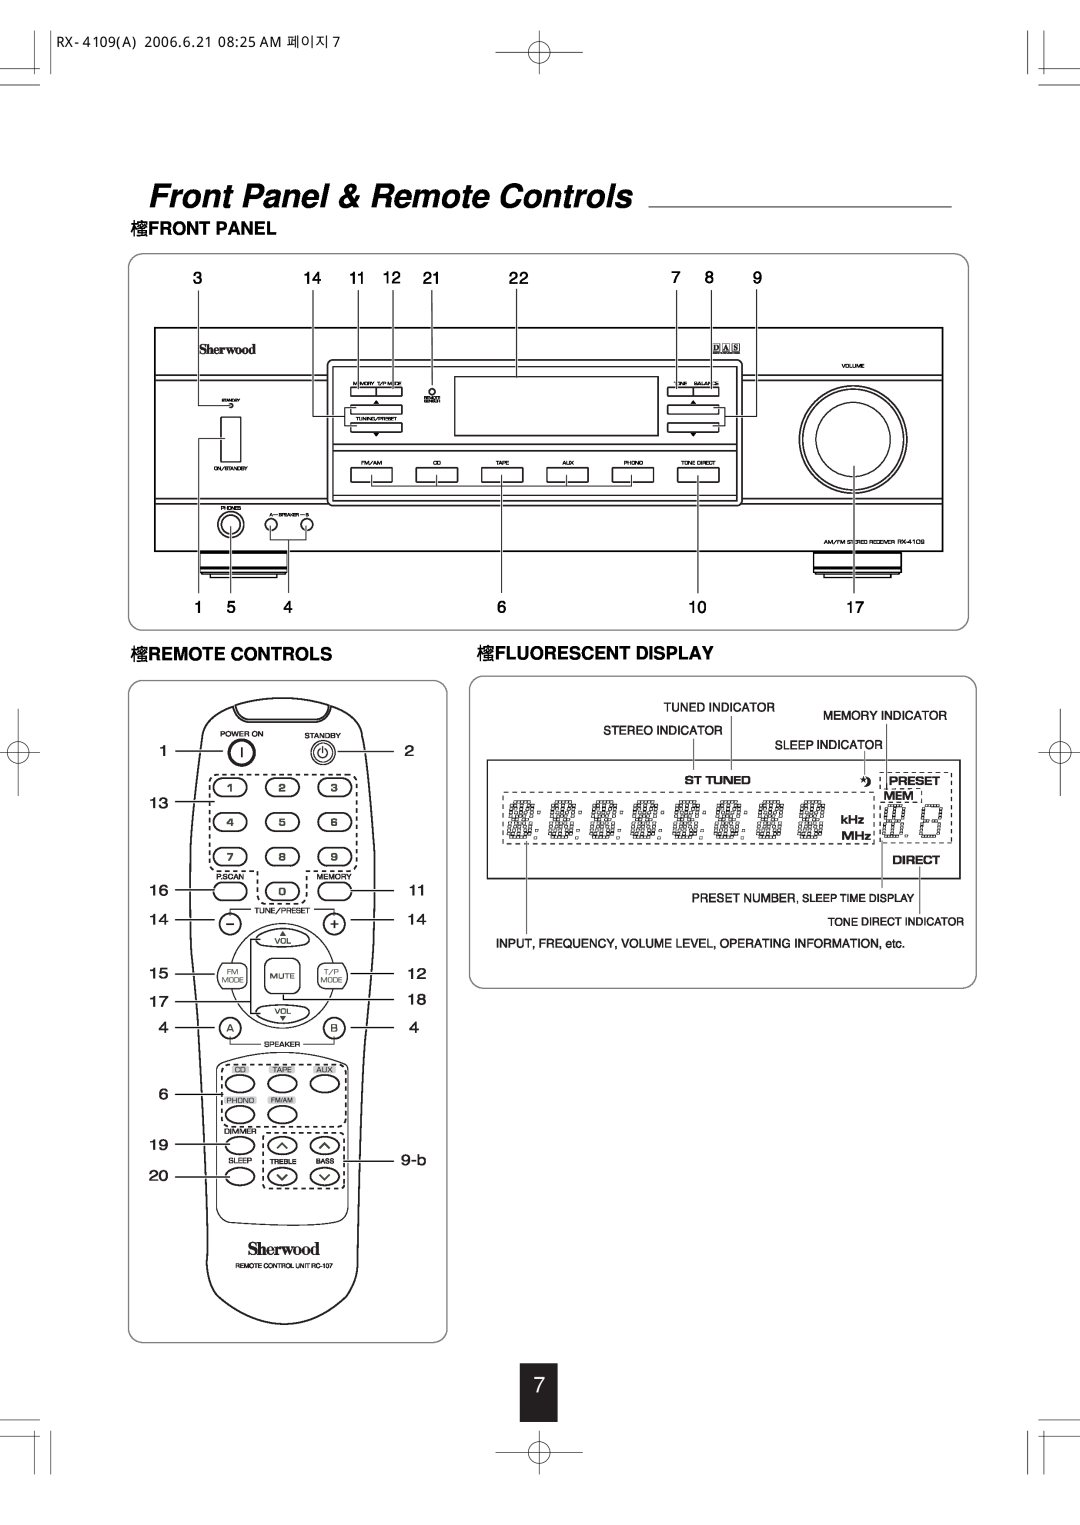 Sherwood manual Front Panel & Remote Controls, Fluorescent Display, RX-4109A 2006.6.21 0825 AM 페이지 